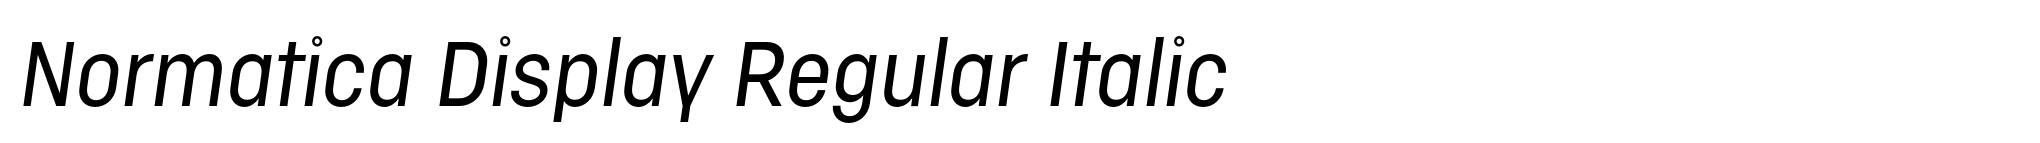 Normatica Display Regular Italic image